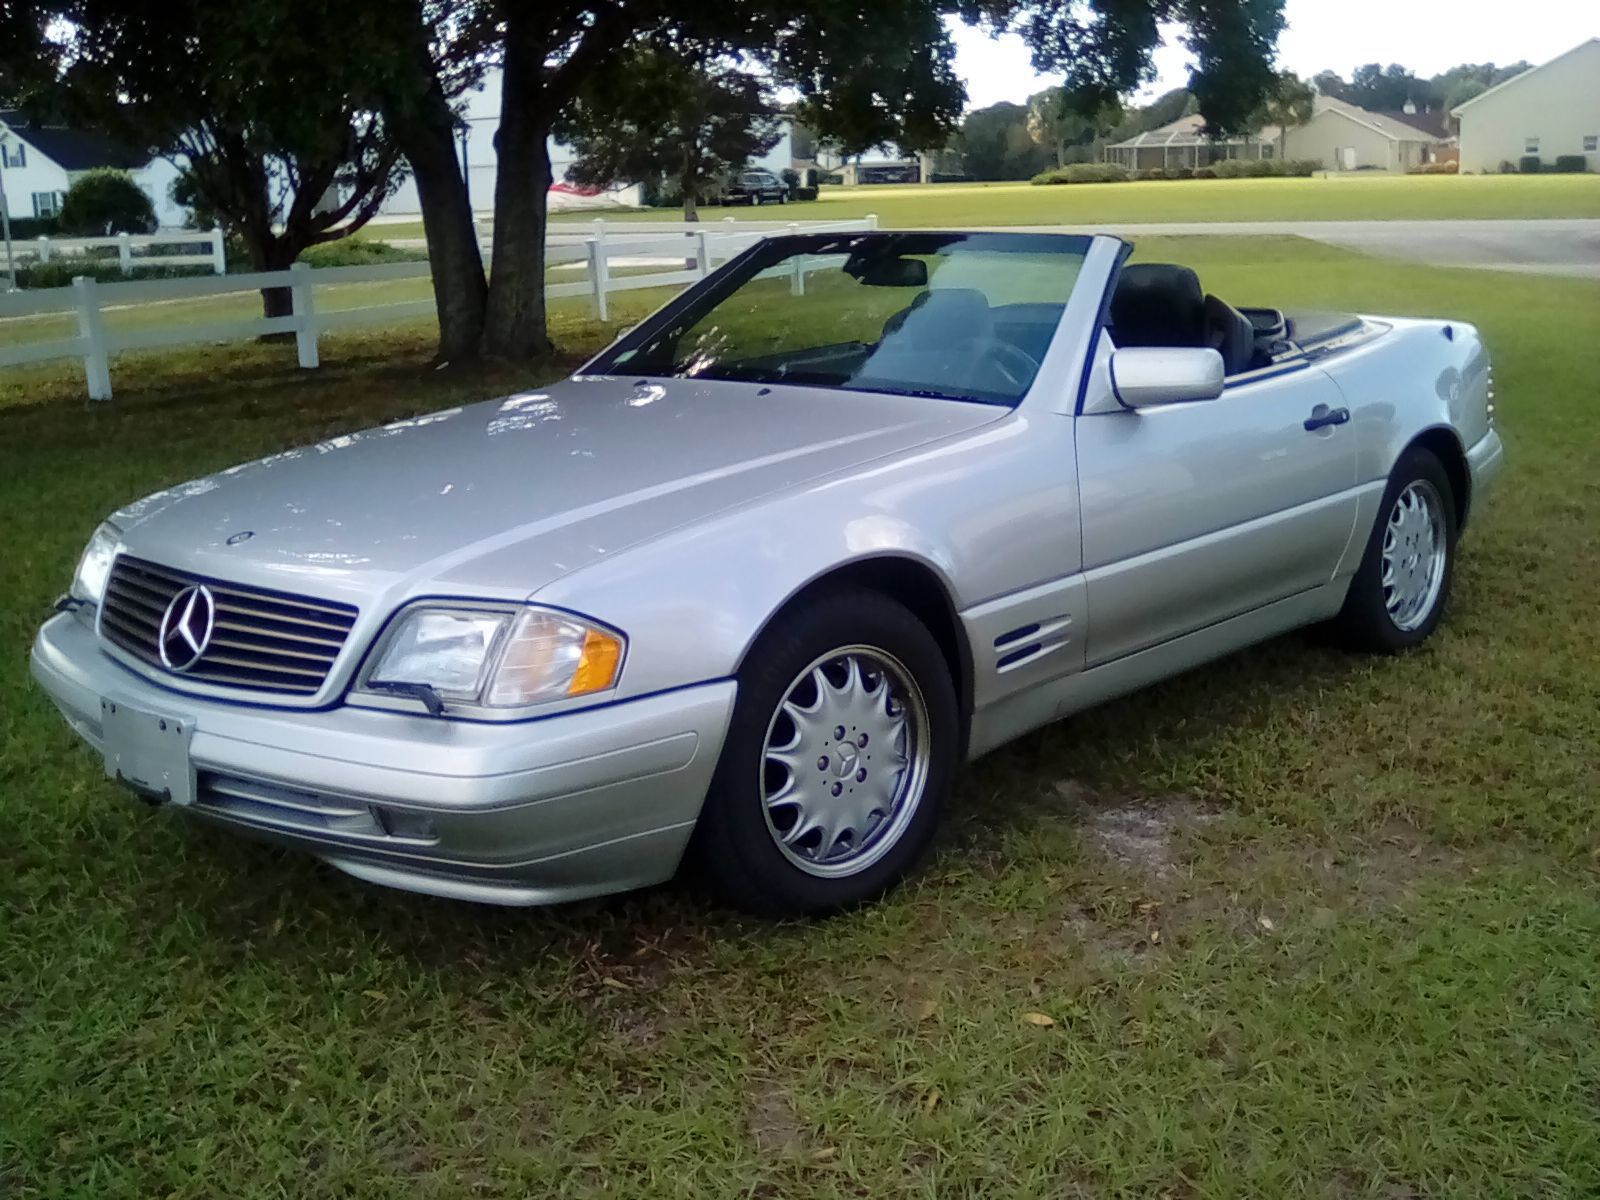 1998 Mercedes-Benz 500sl Silver Spring Shores, Florida | Hemmings.com